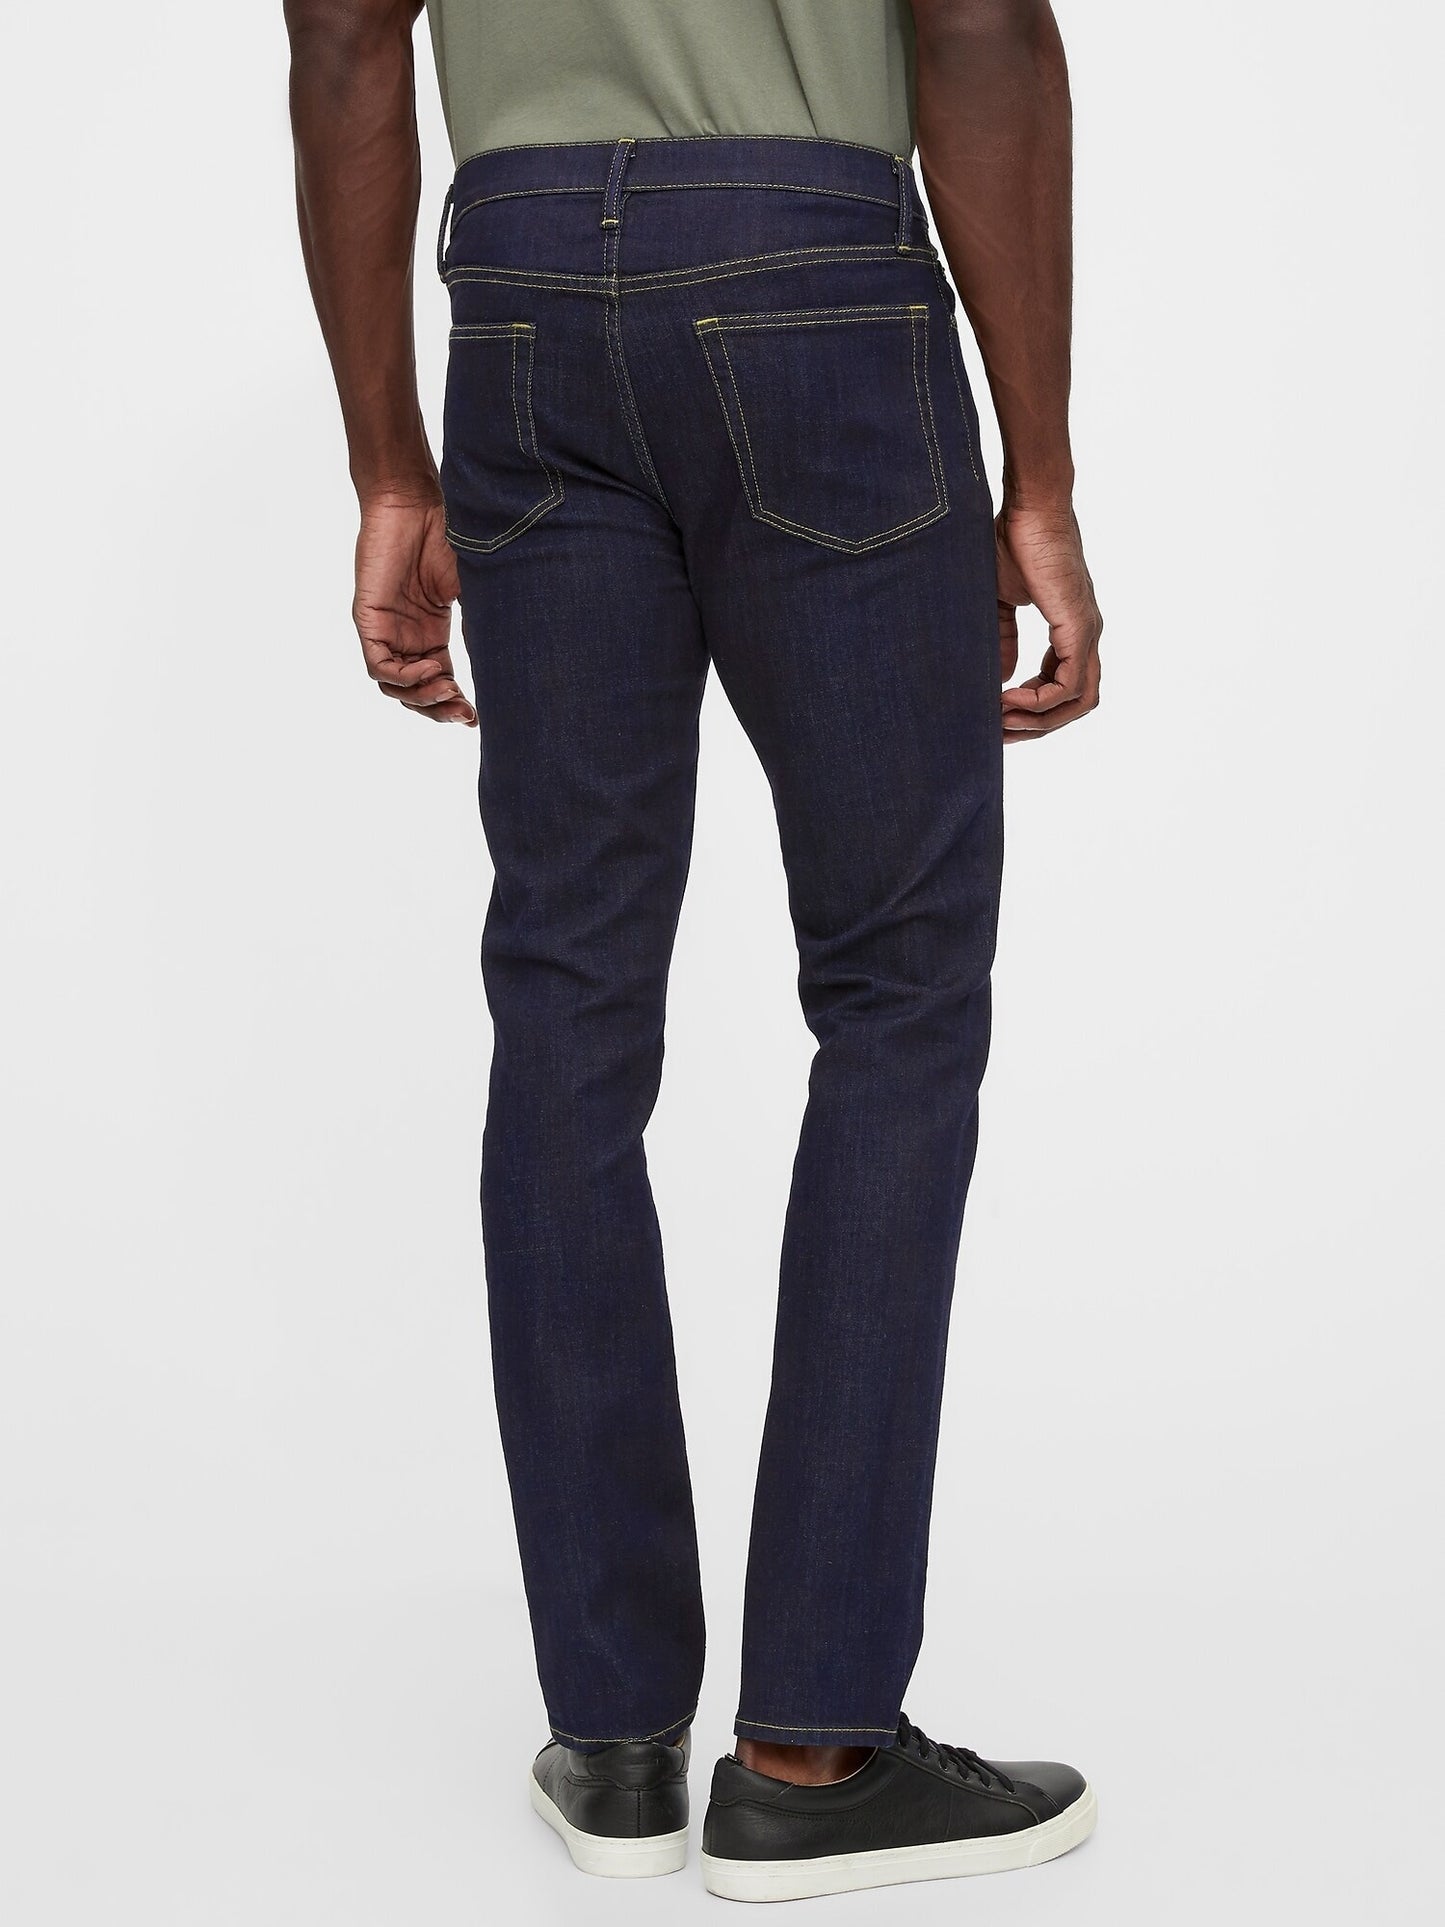 Gap Soft Wear Skinny Jeans With Gapflex - Resin Rinse